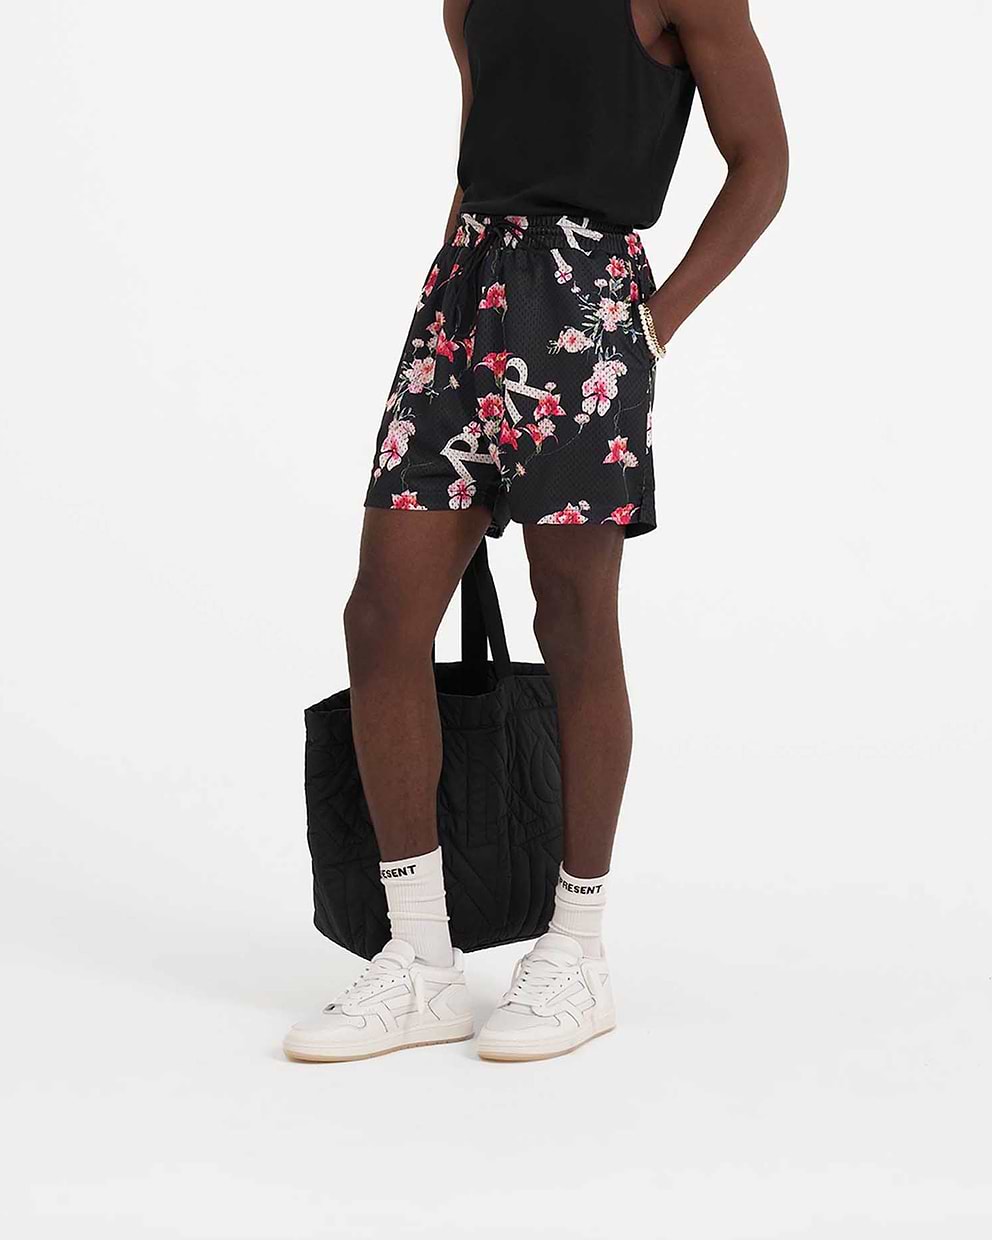 Floral Mesh Shorts - Black